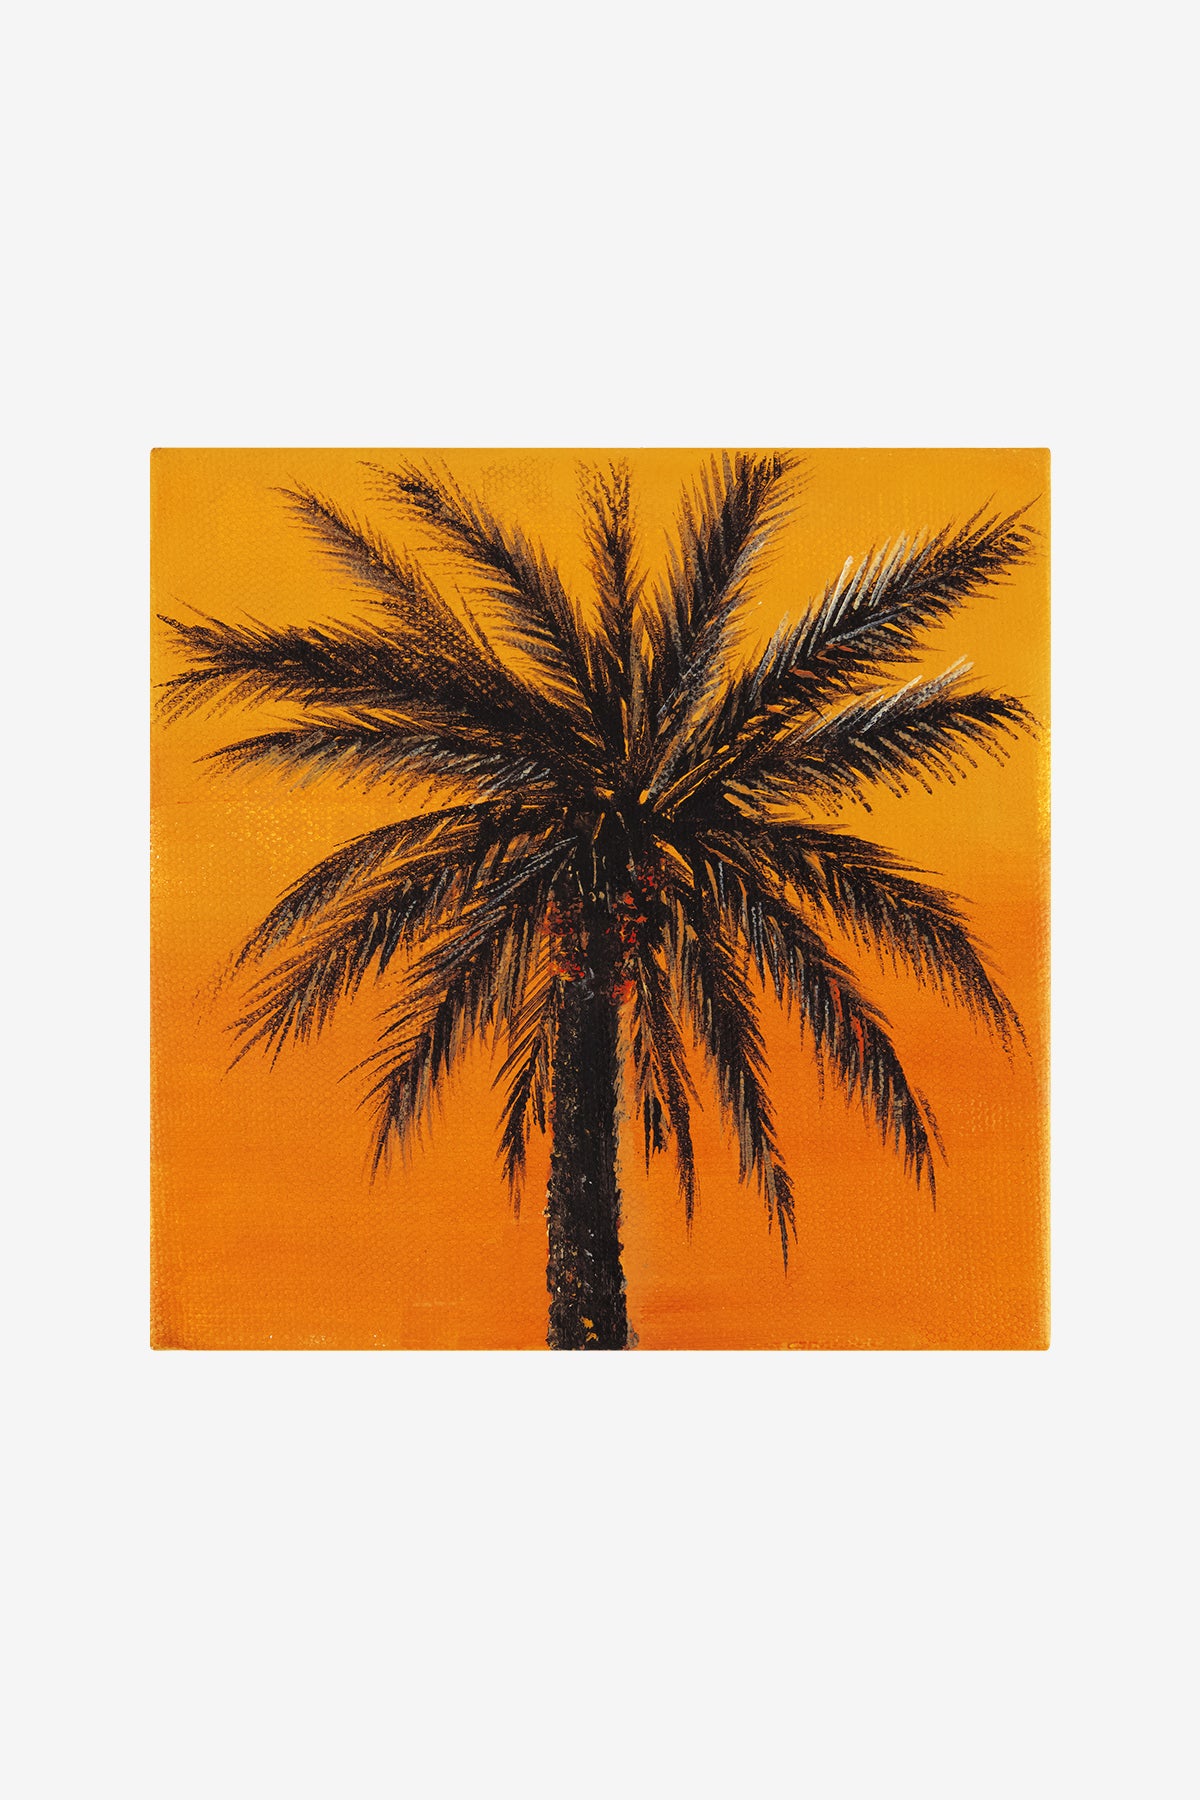 Palm at Sunset